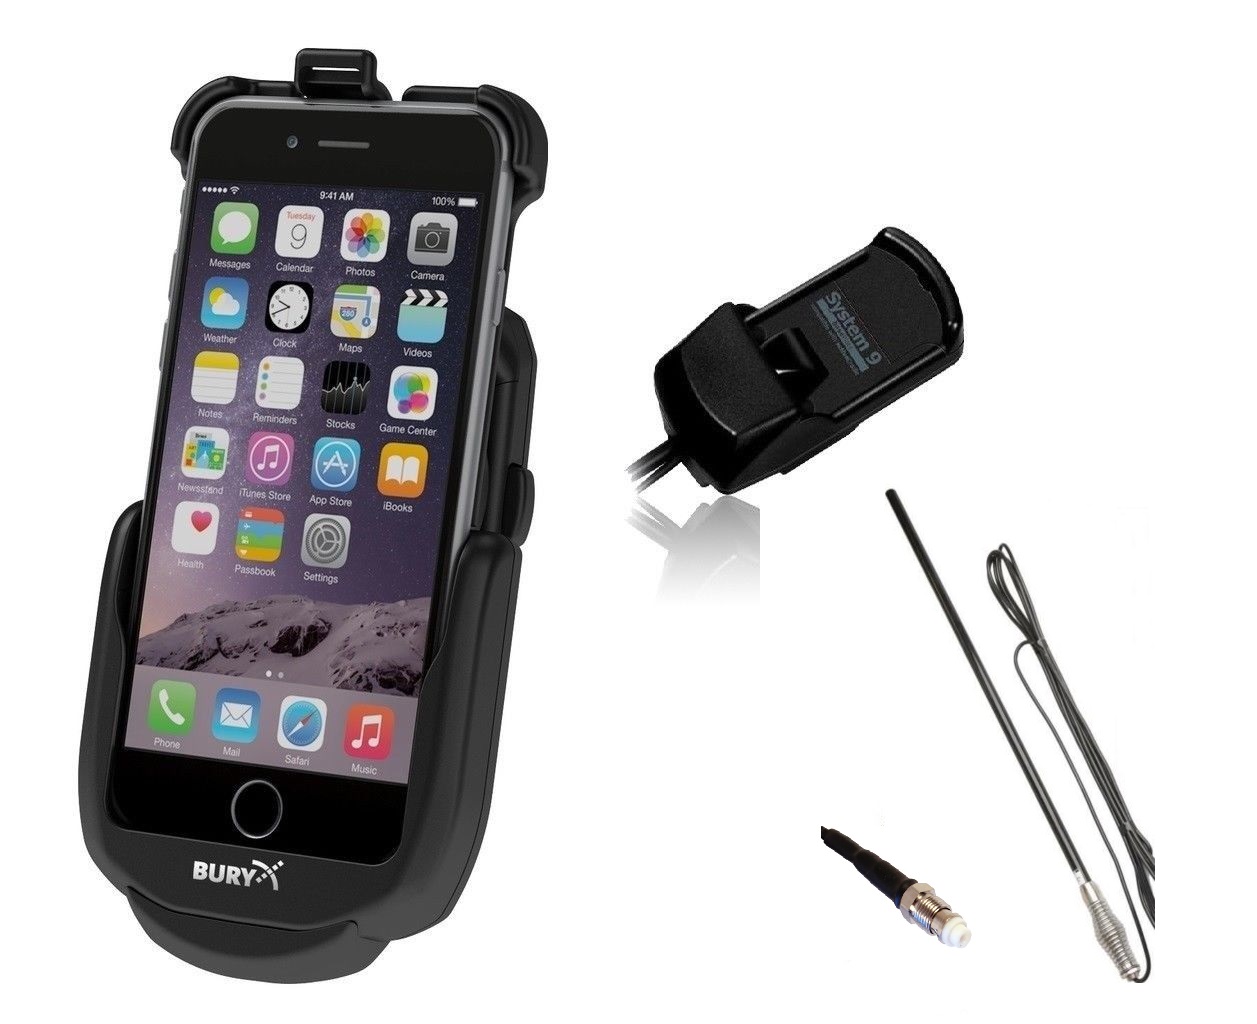 THFCOMMS | Bury Hands-Free car kit system 9 7 db gain antenna iPhone 6 & 6